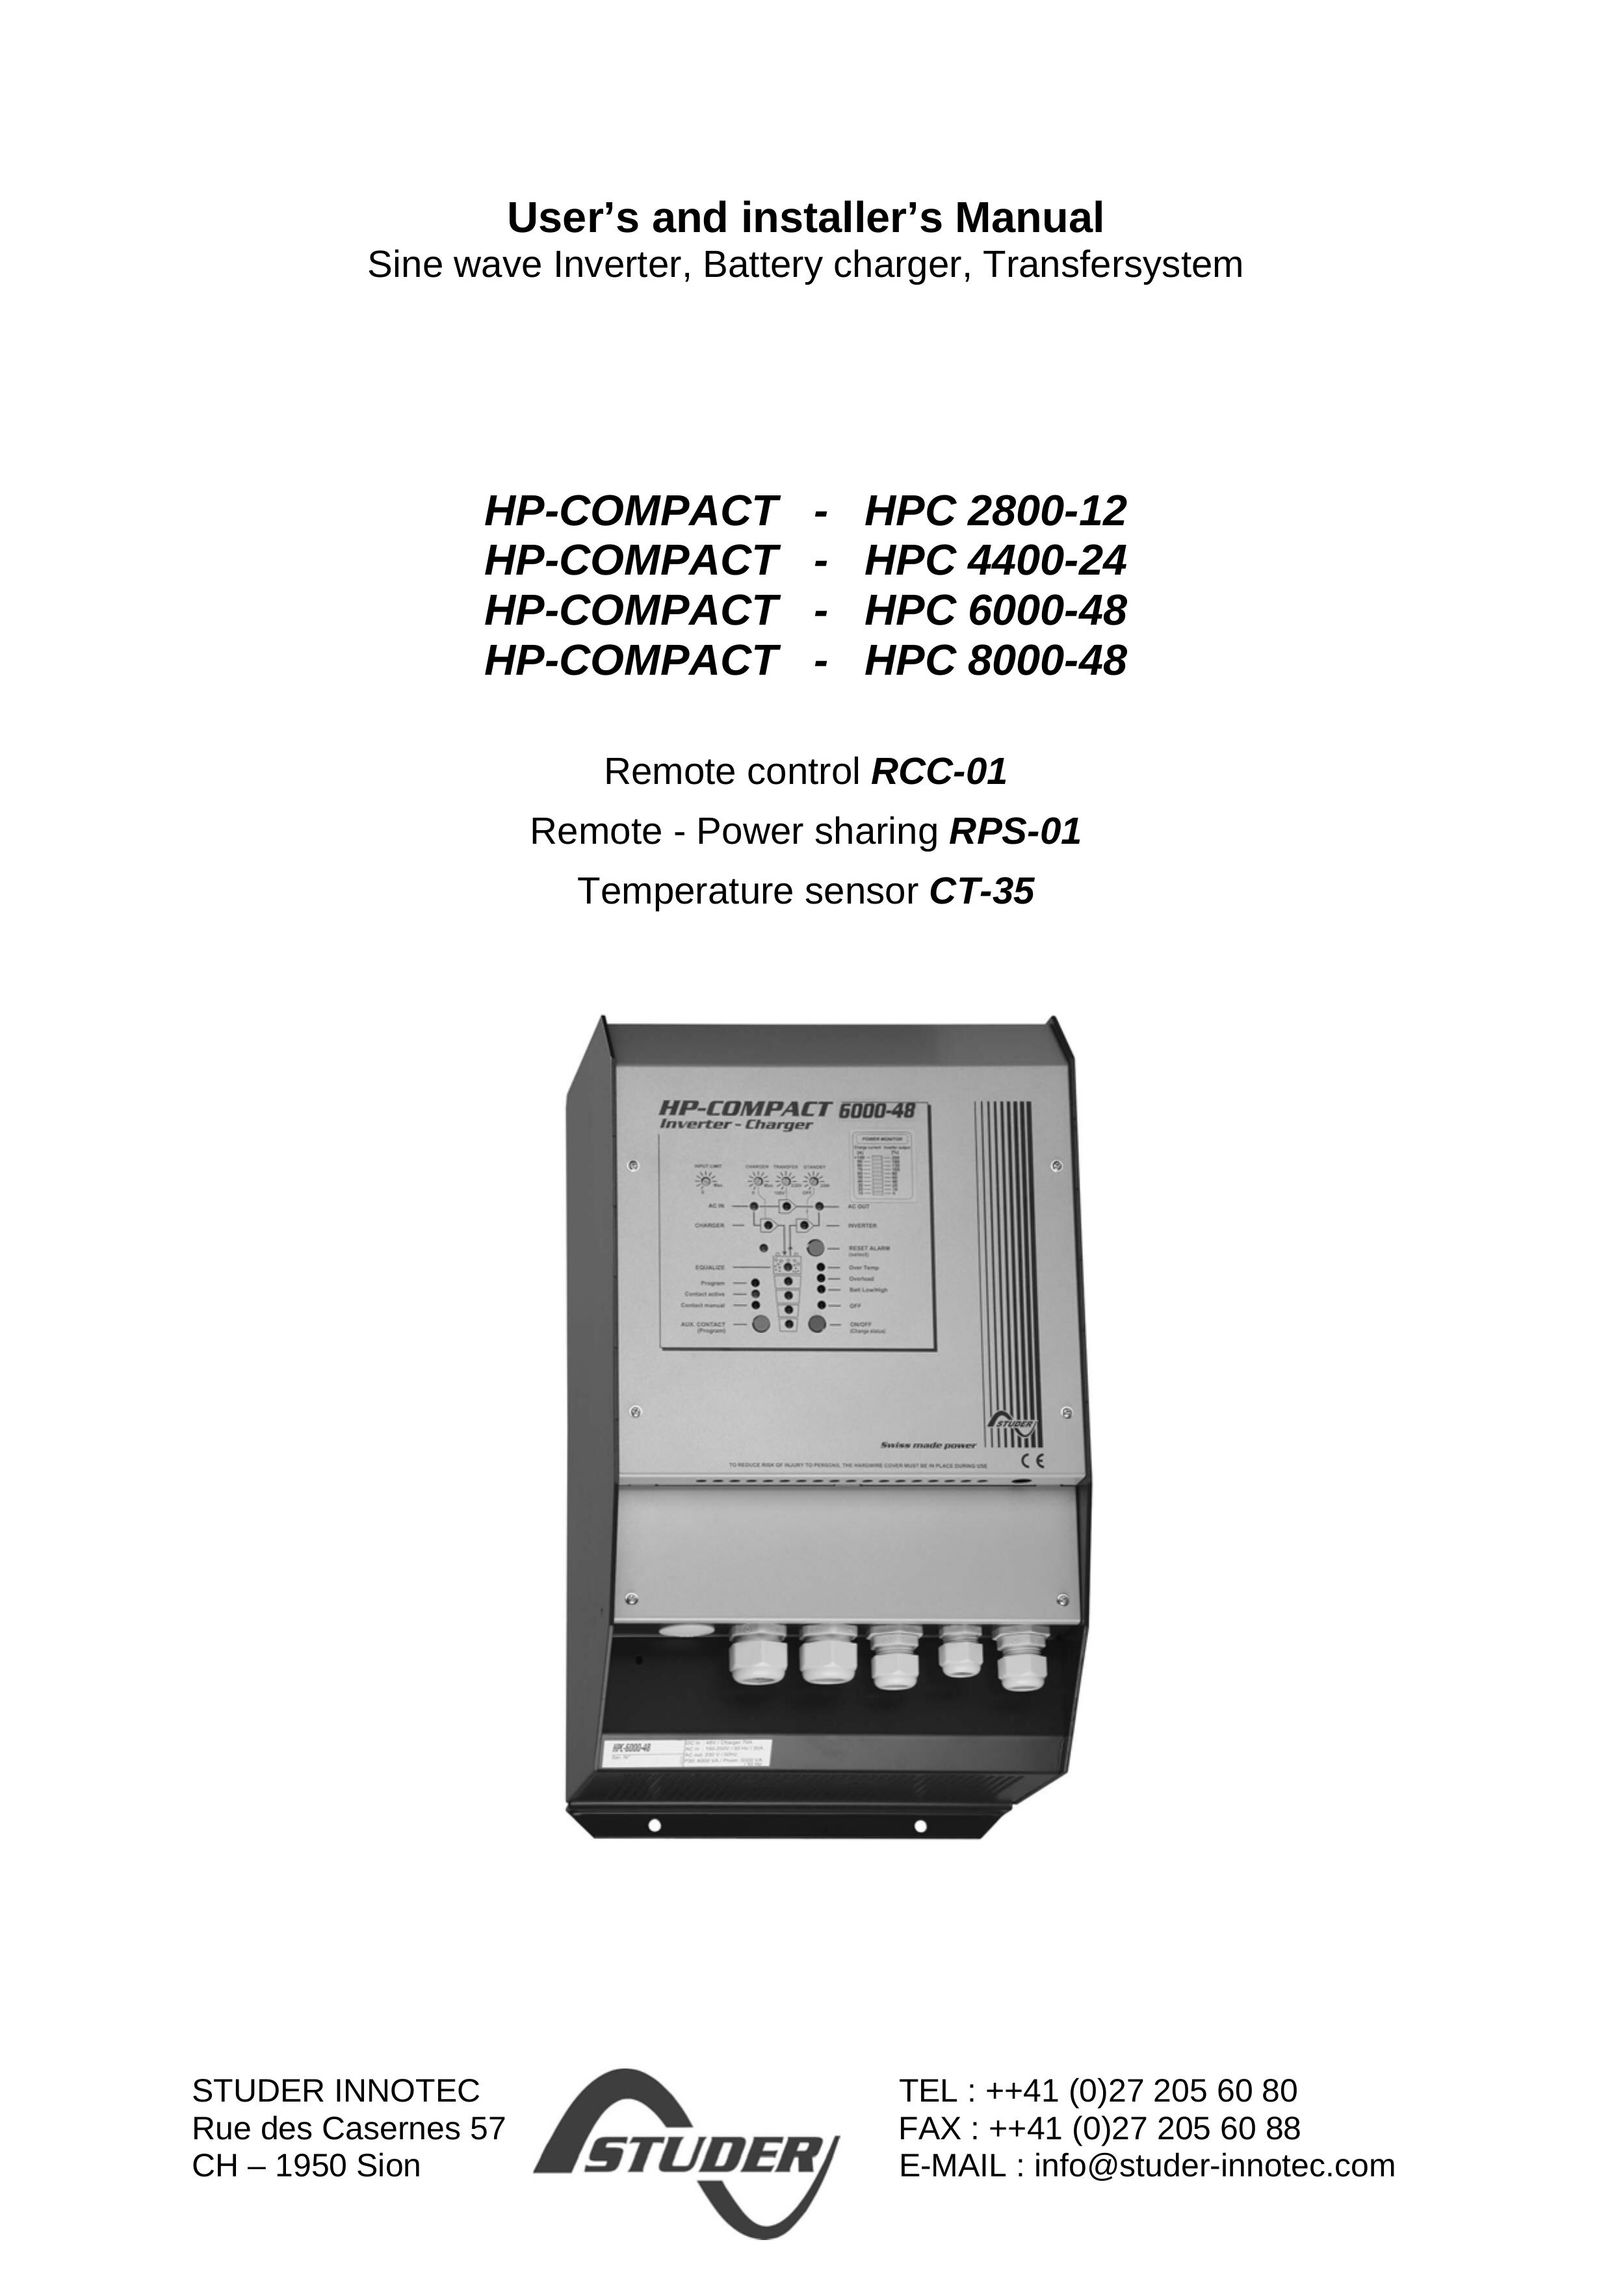 Studer Innotec HPC 2800-12, HPC 4400-24, HPC 600-48, HPC 6000-48 Battery Charger User Manual